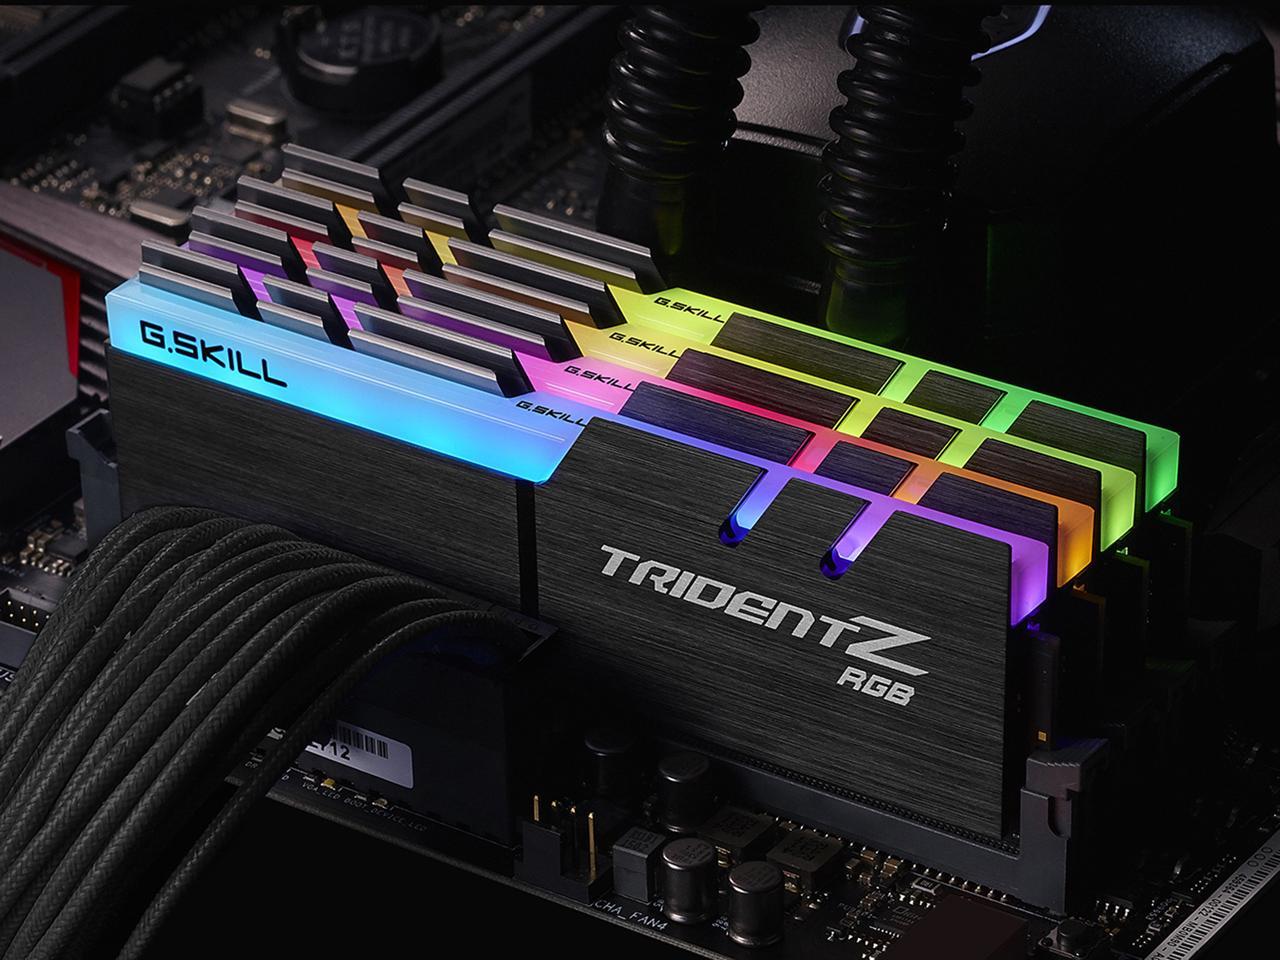 G.SKILL TridentZ RGB Series 32GB (4 x 8GB) 288-Pin DDR4 SDRAM DDR4 3000 (PC4 24000) Desktop Memory Model F4-3000C15Q-32GTZR